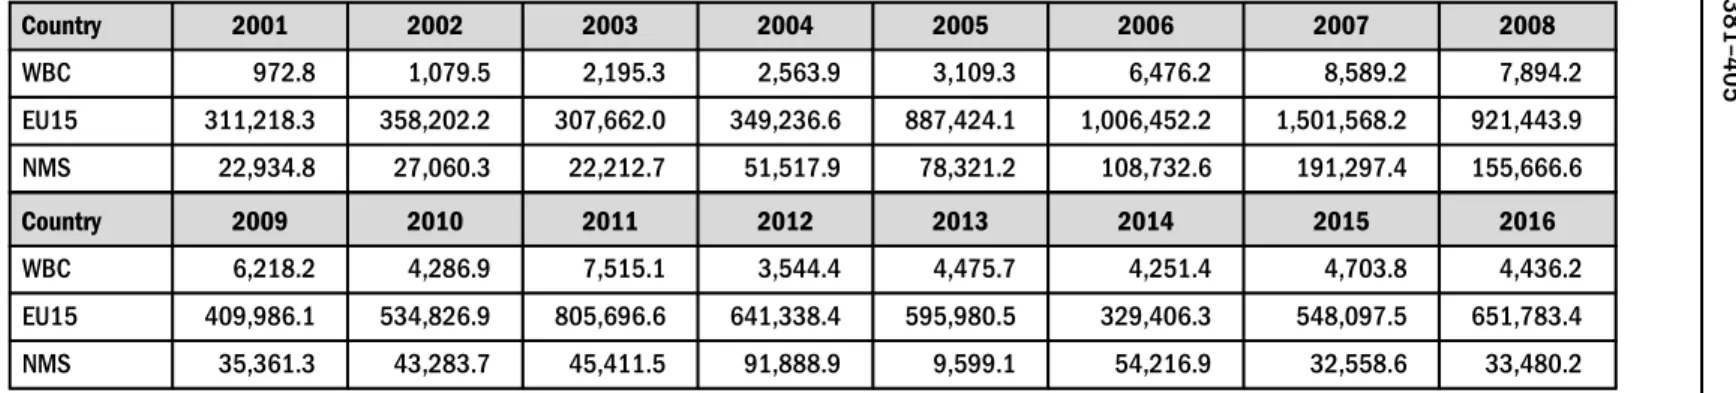 Table 2. The net FDI inﬂows (million $) Country 2001 2002 2003 2004 2005 2006 2007 2008 WBC 972.8 1,079.5 2,195.3 2,563.9 3,109.3 6,476.2 8,589.2 7,894.2 EU15 311,218.3 358,202.2 307,662.0 349,236.6 887,424.1 1,006,452.2 1,501,568.2 921,443.9 NMS 22,934.8 